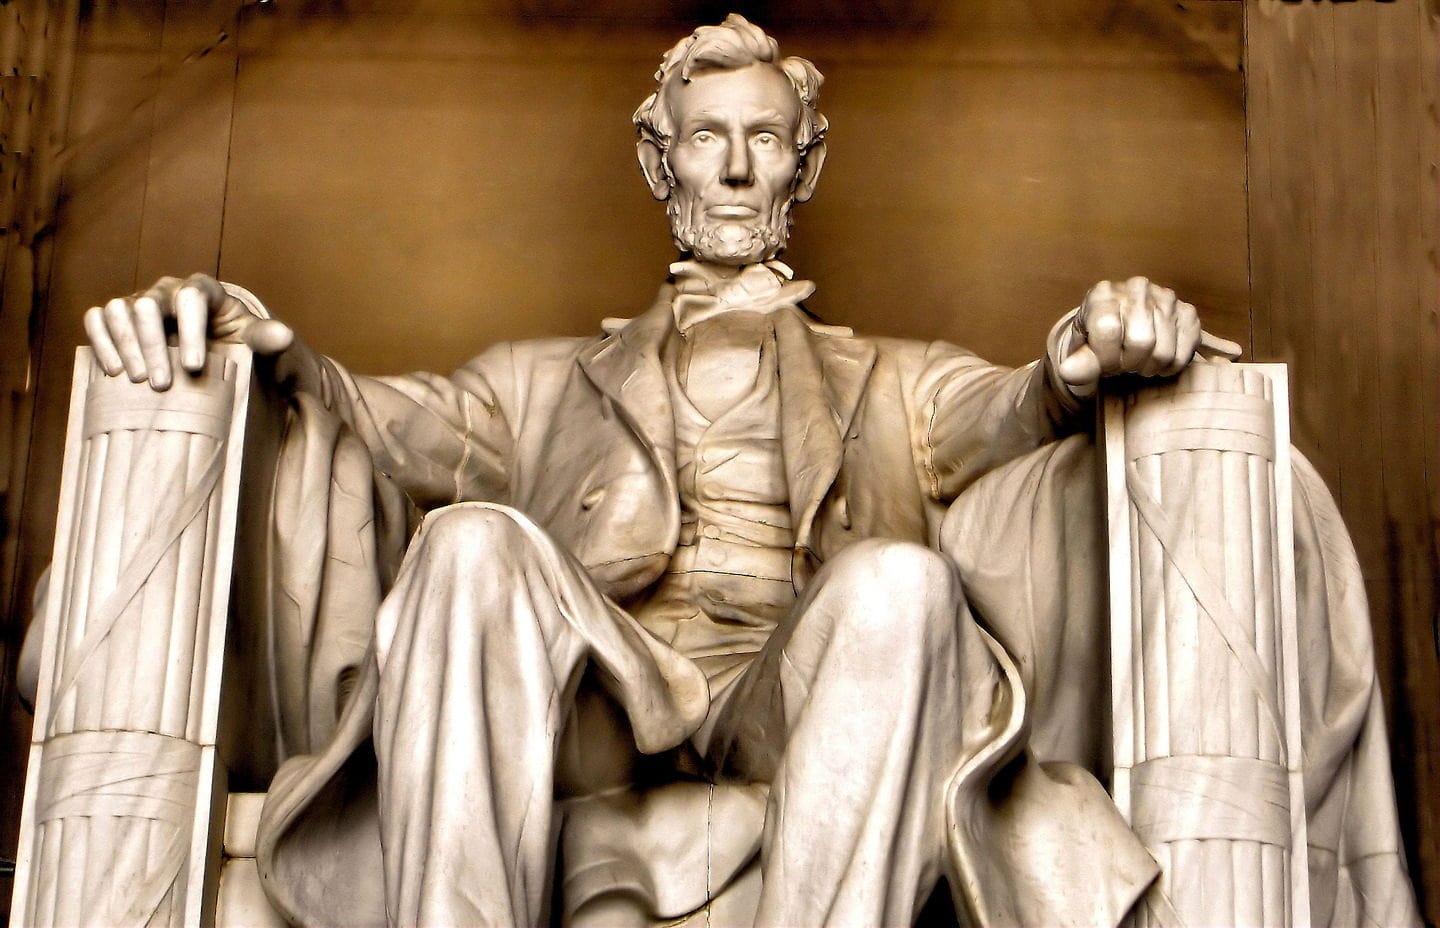 Abraham Lincoln Statue, Washington, DC